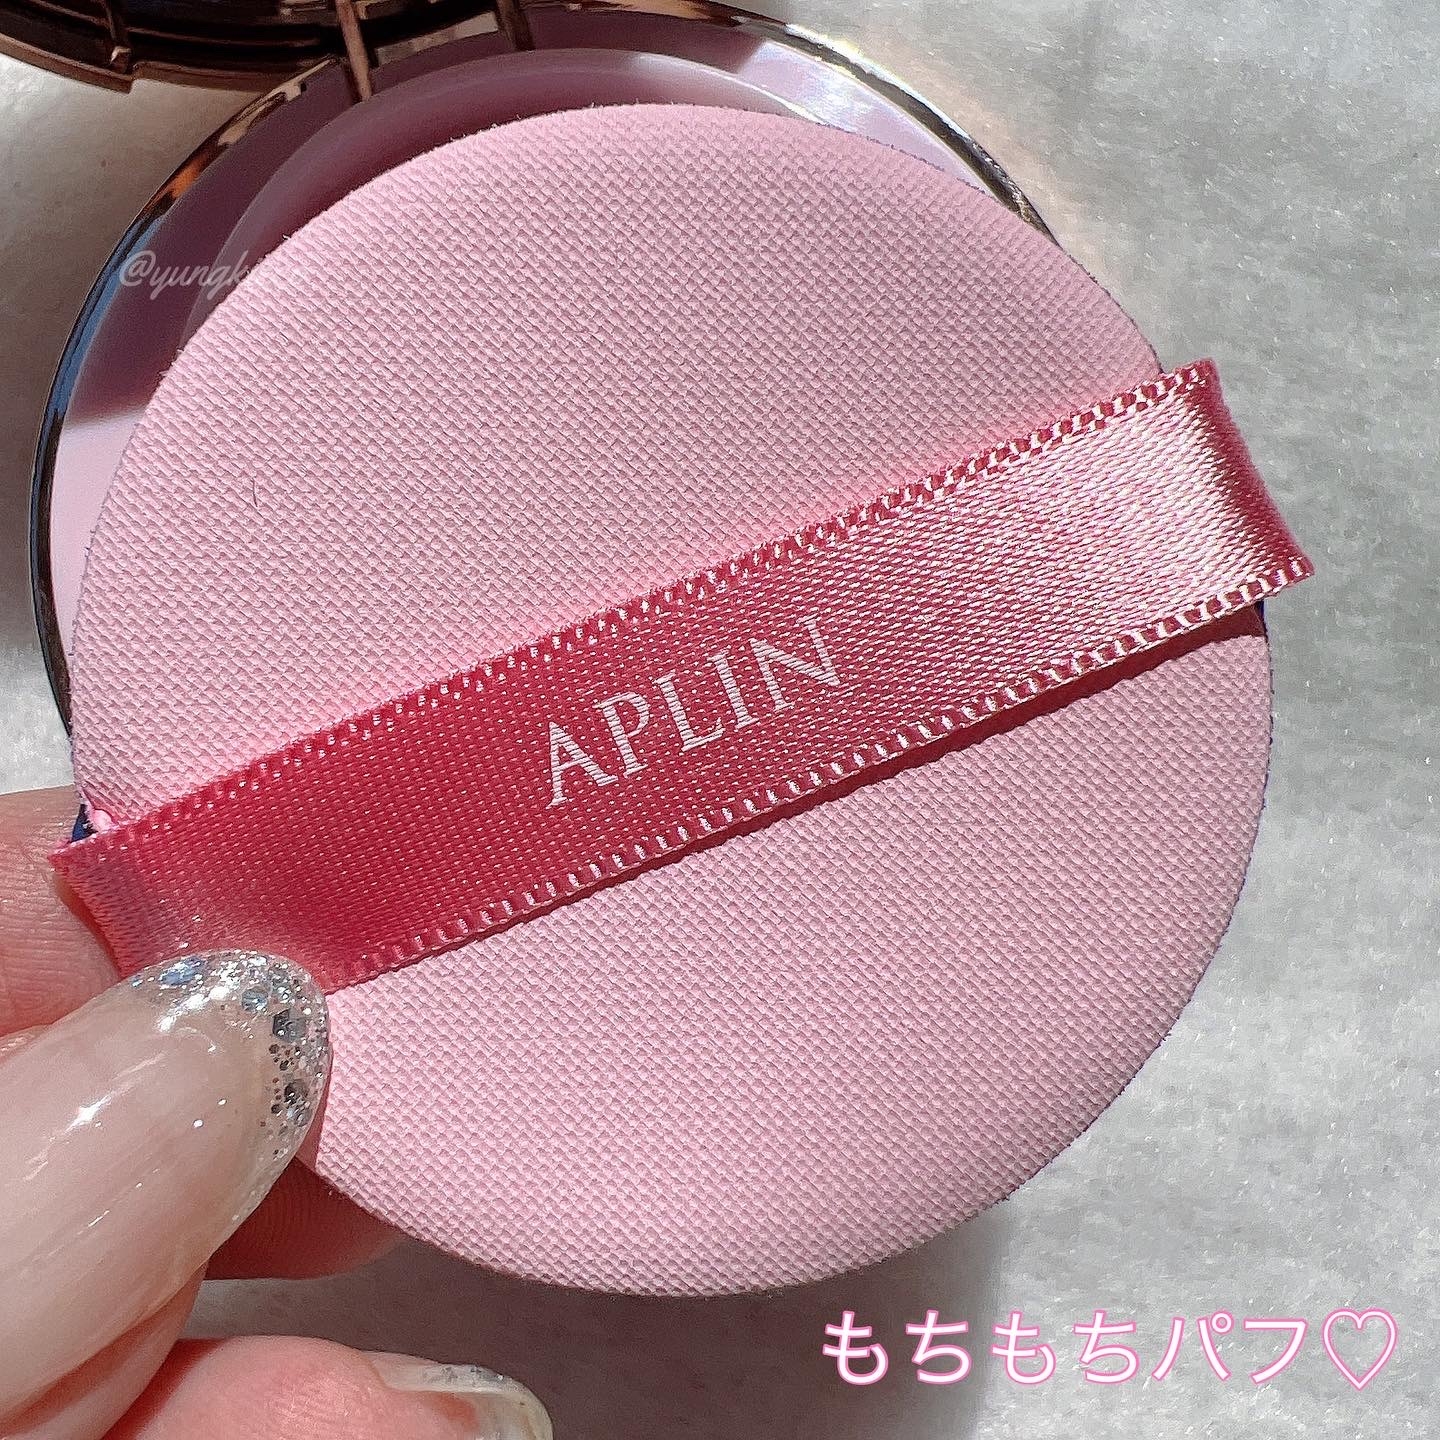 APLIN(アプリン) ピンクティーツリーカバークッションの良い点・メリットに関するyungさんの口コミ画像3